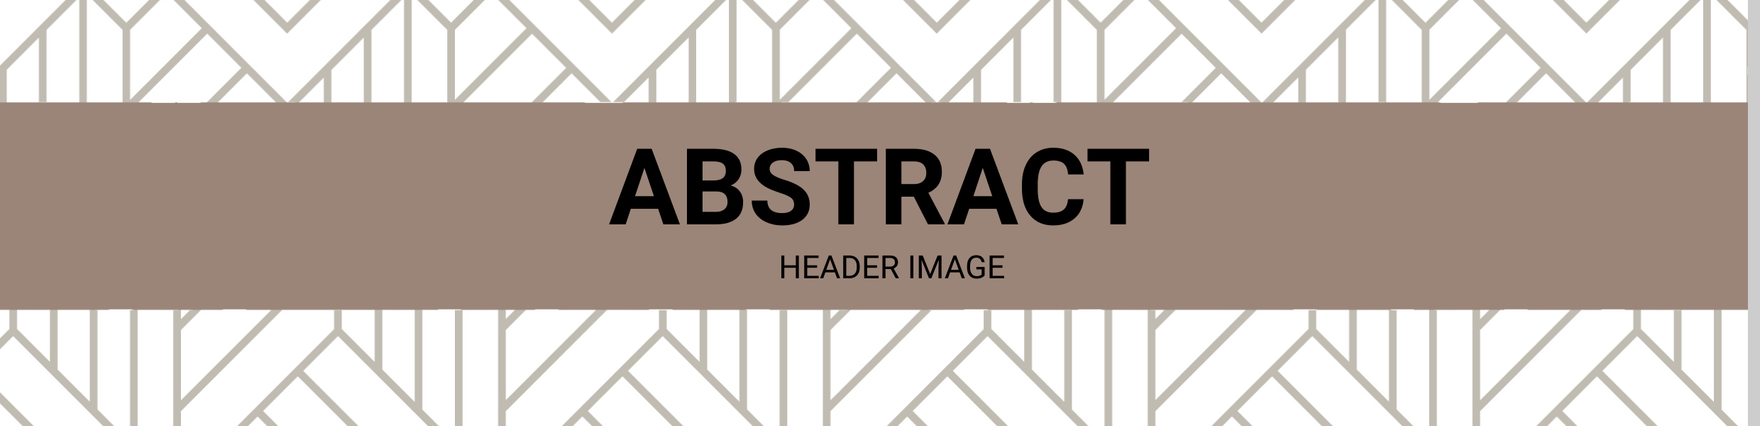 Abstract Header Image